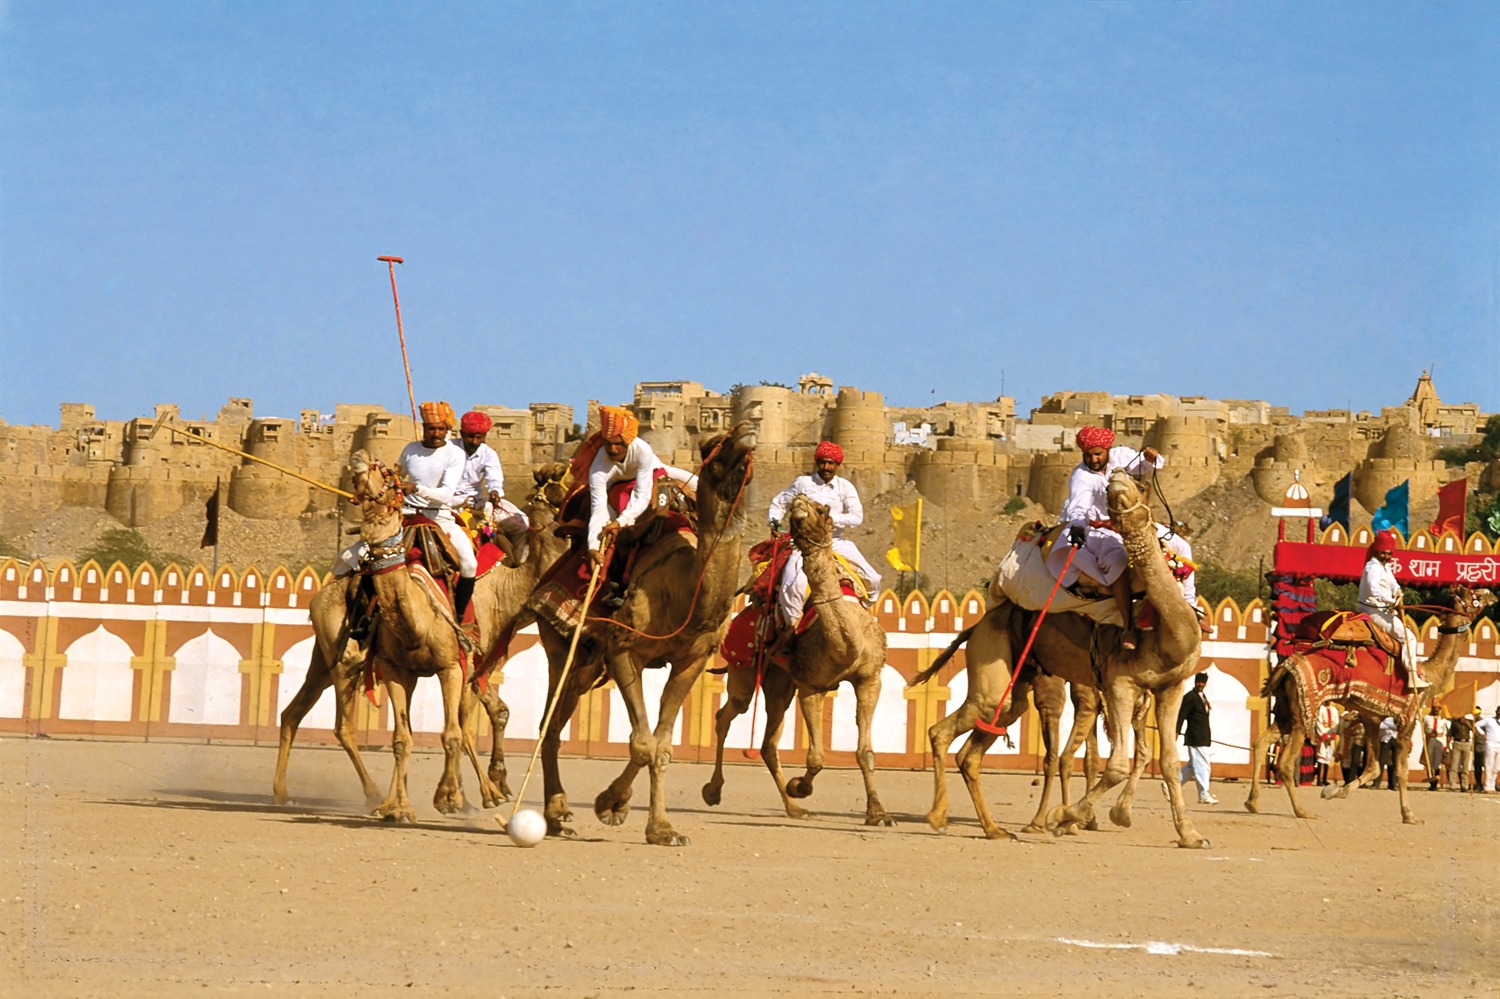 Rajasthan Tourism to organise ‘Desert Festival – Maru Mahotsav’ based on historical, modern and fantasy themes